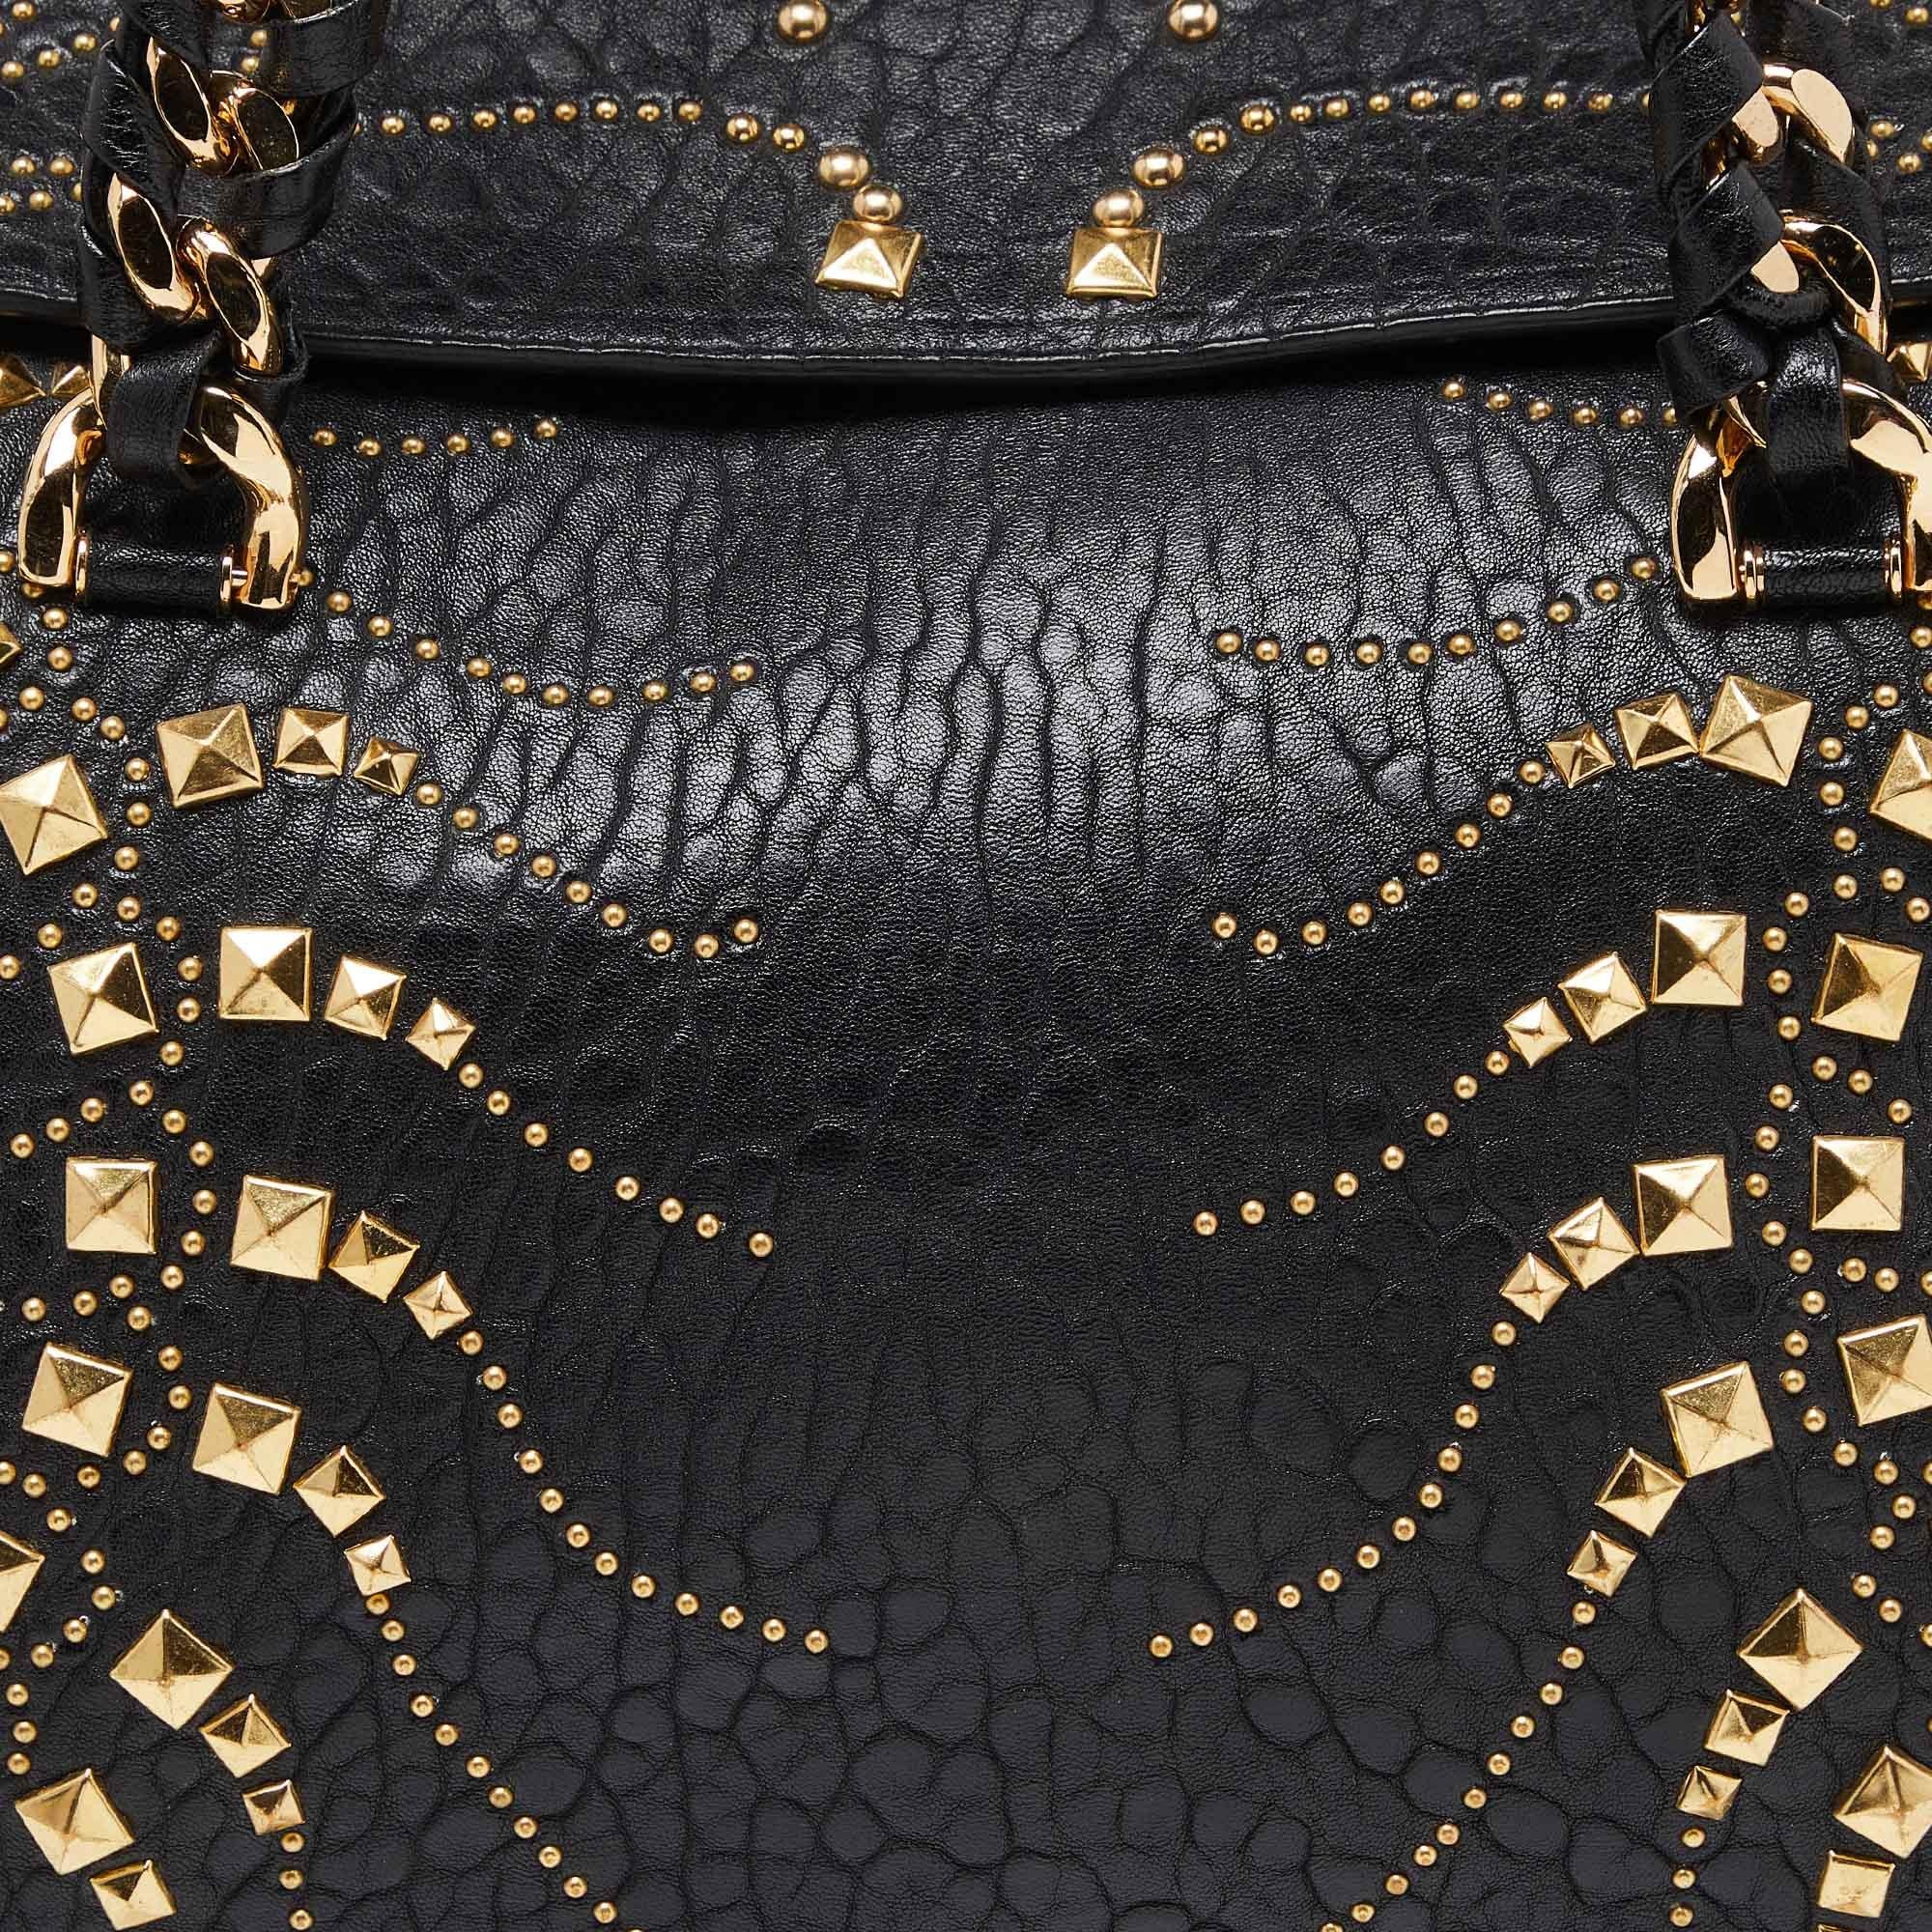 Women's Roberto Cavalli Black Studded Leather Satchel